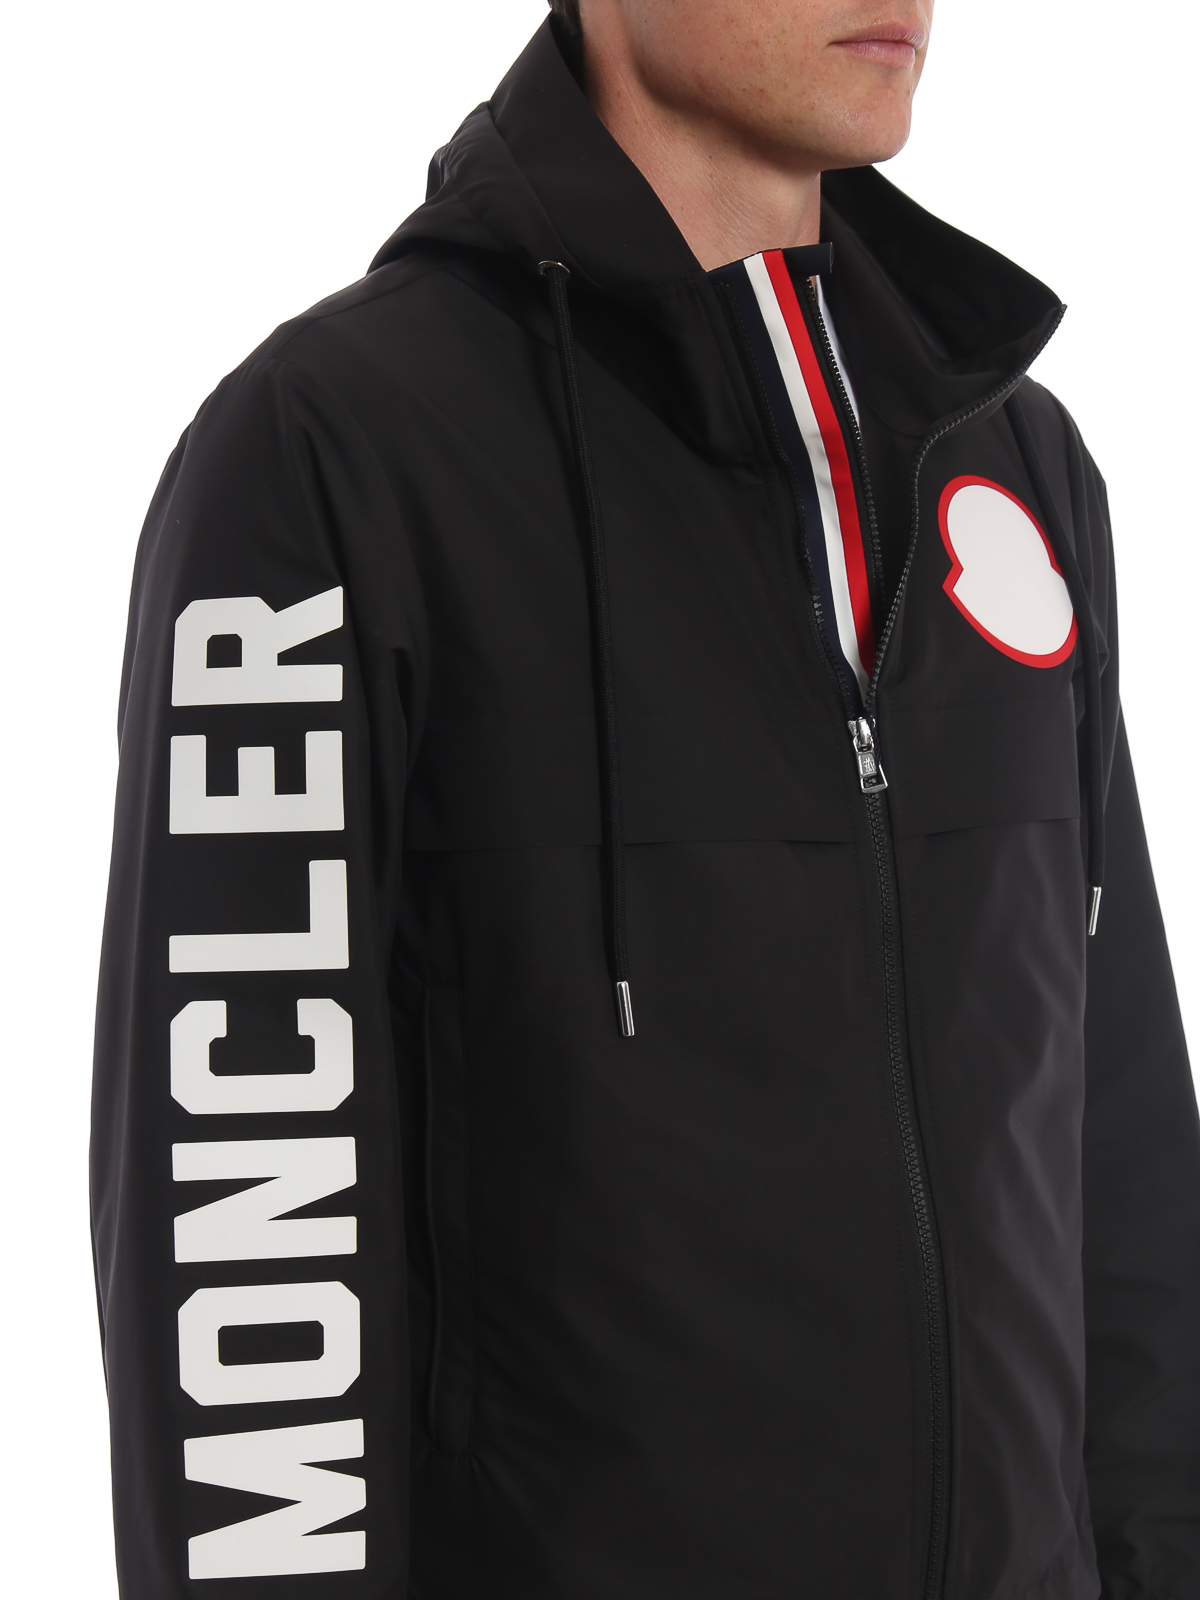 Moncler - Montreal black jacket 